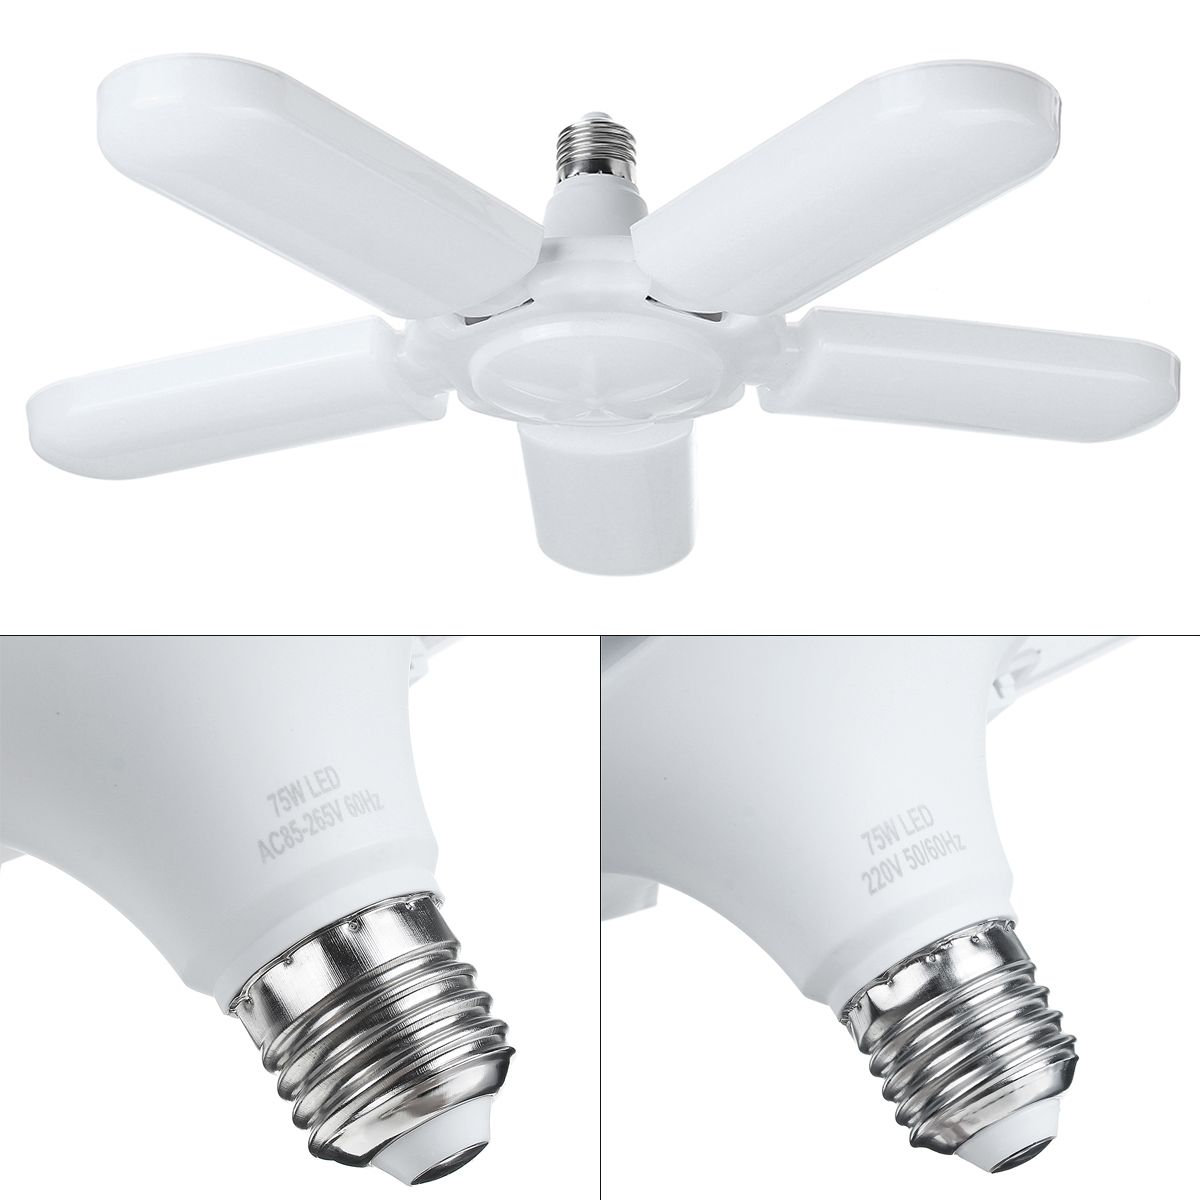 135pcs-75W-E27-LED-Light-Bulb-Deformable-Ceiling-Garage-Lamp-Fixture-for-Workshop-Home-AC85-265V-AC1-1645598